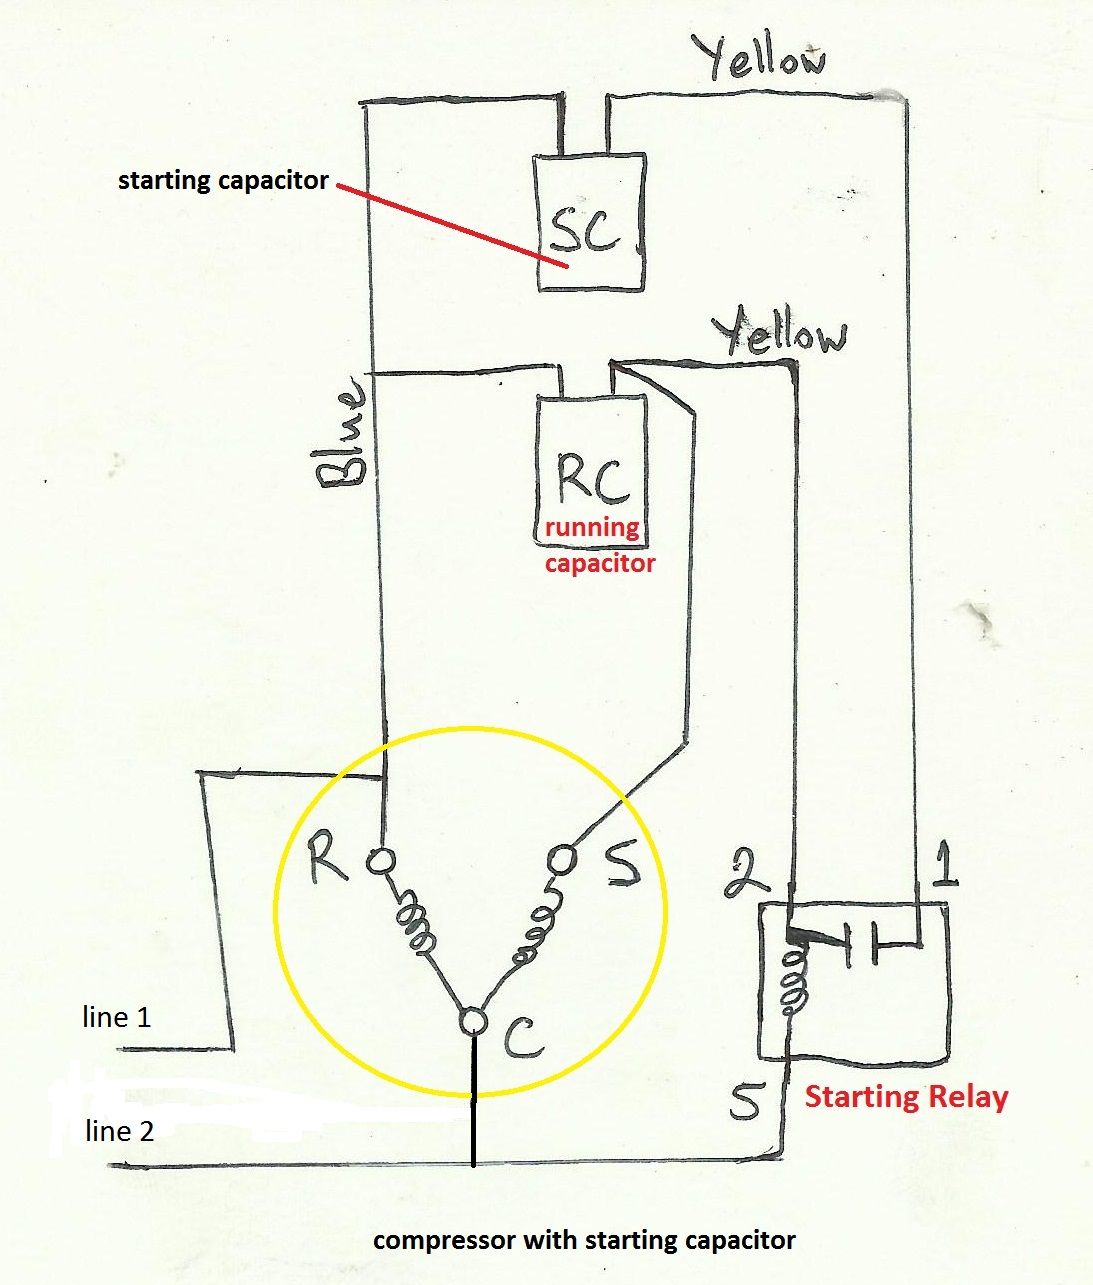 Tecumseh Compressor Wiring Diagram | Wiring Library